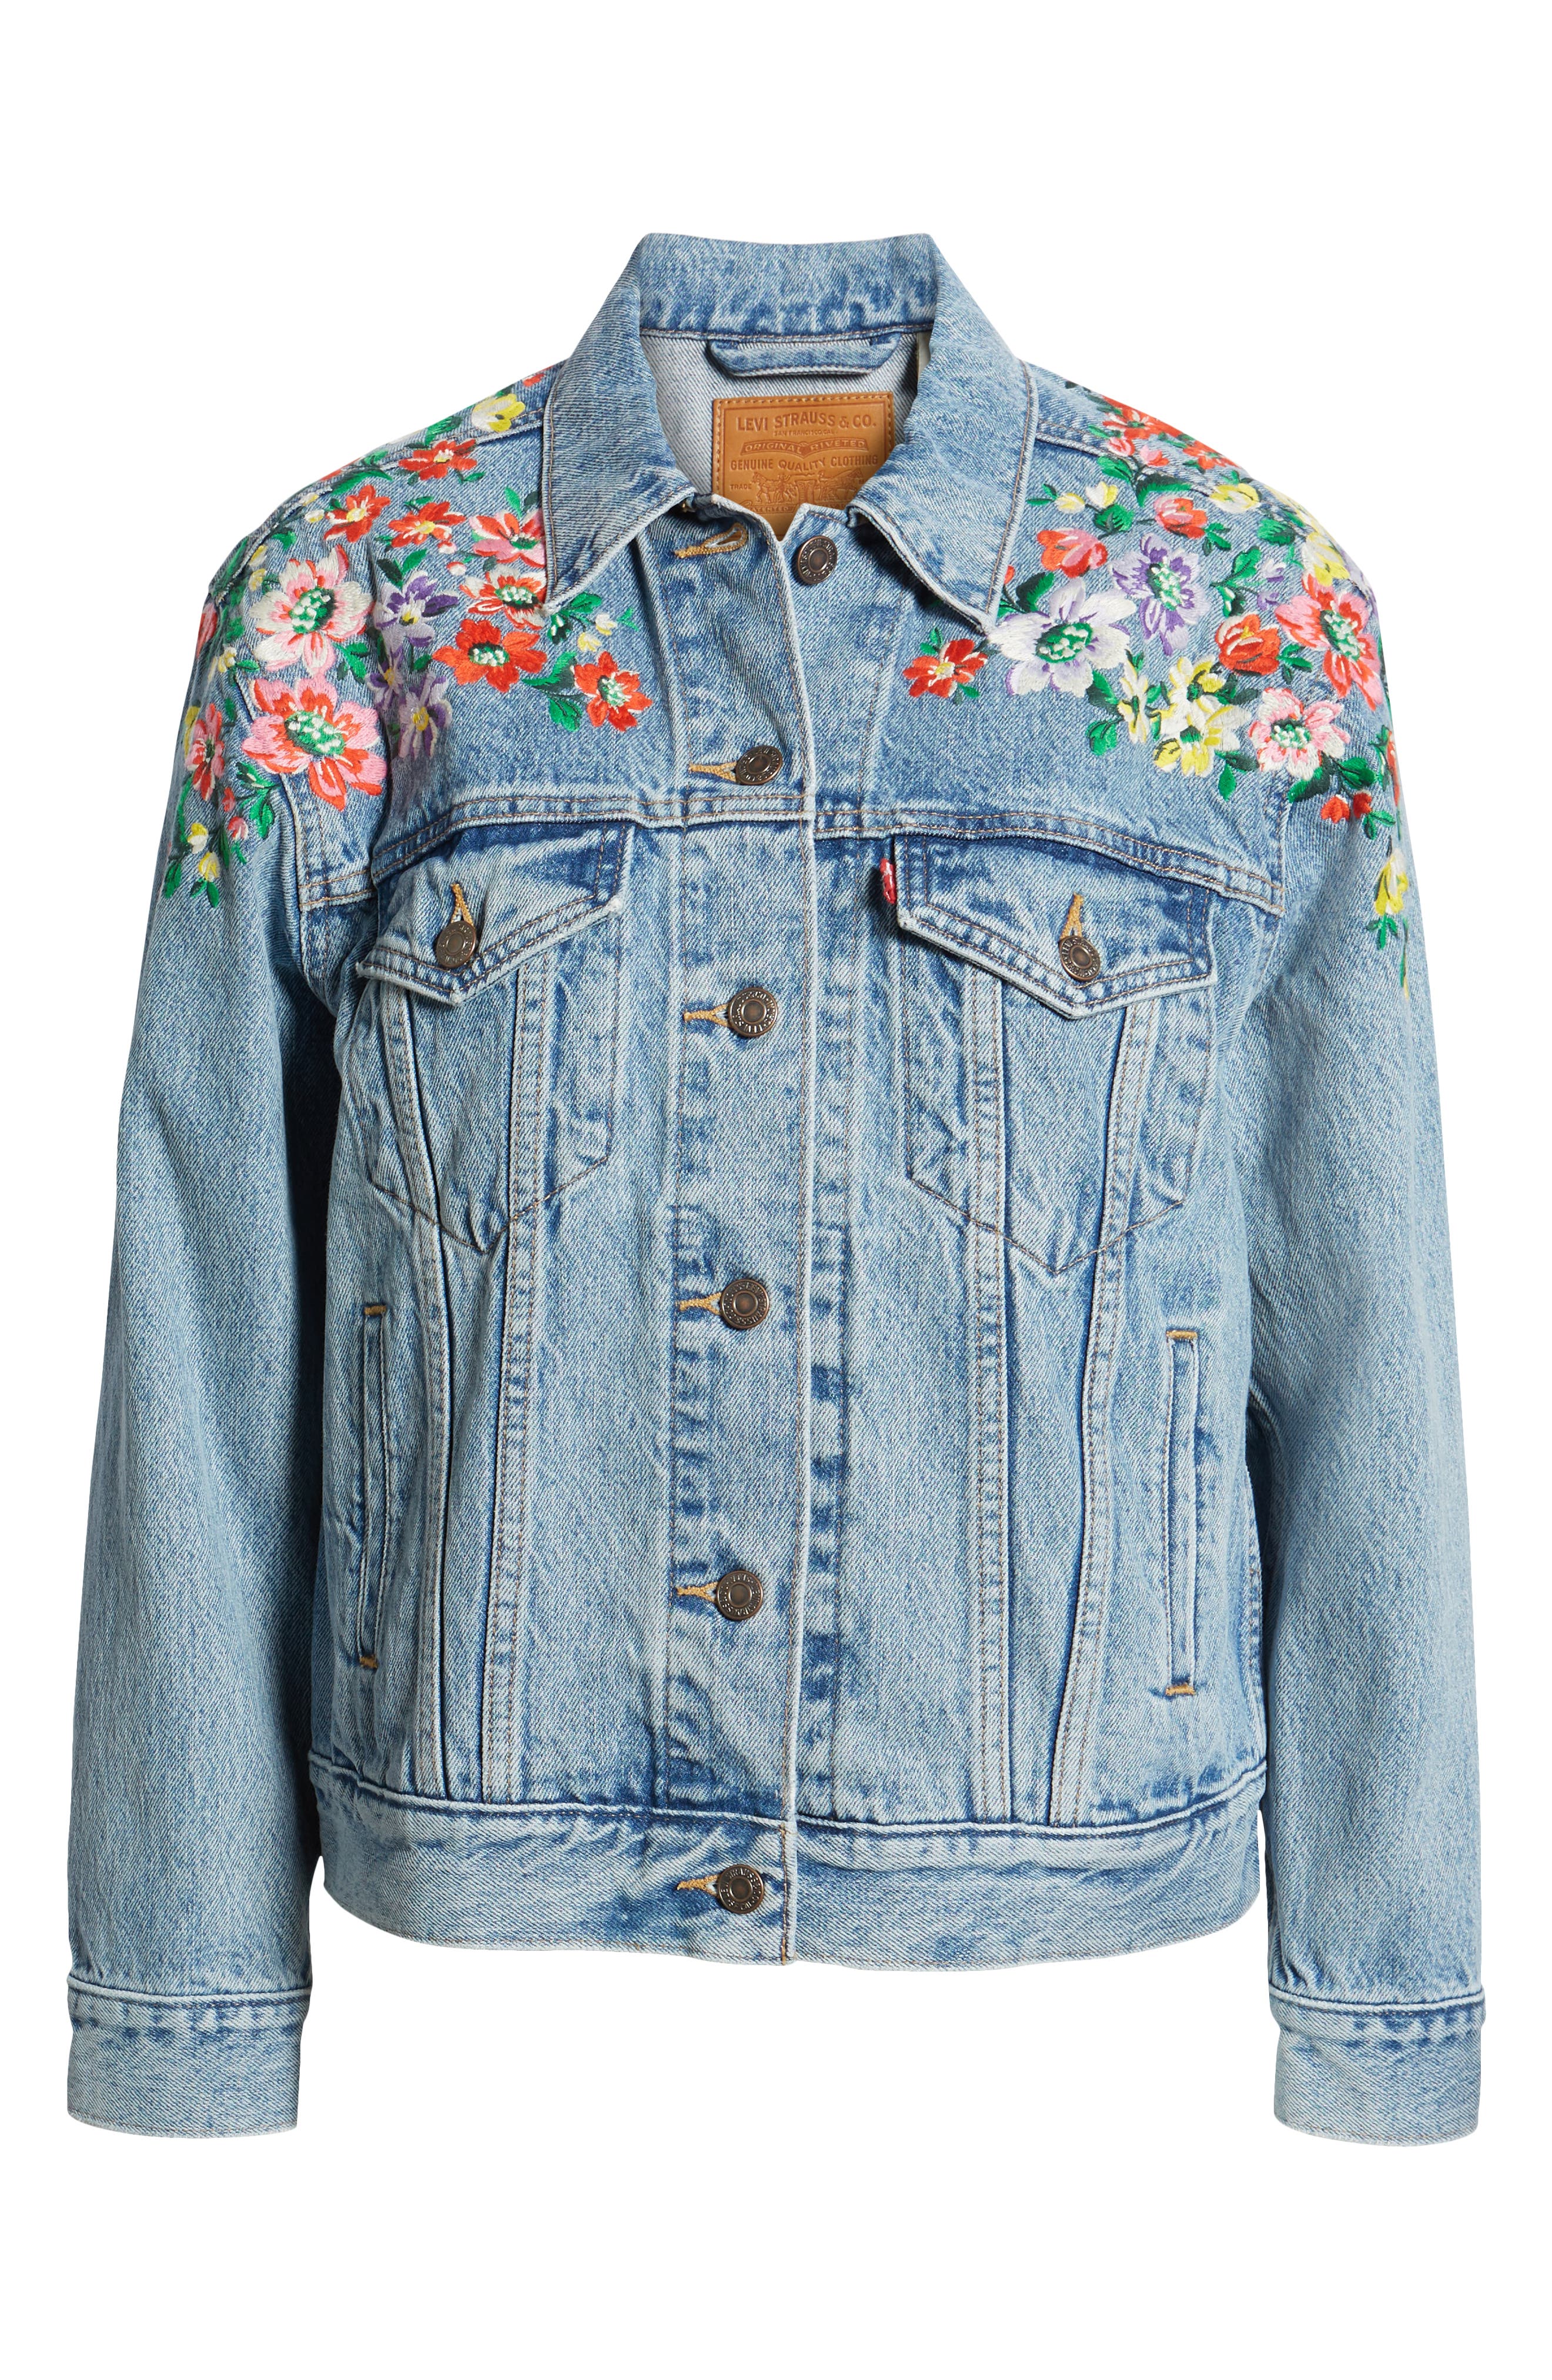 Best Oversized Denim Jackets for 2022 - Cool Oversized Jean Jackets For  Spring